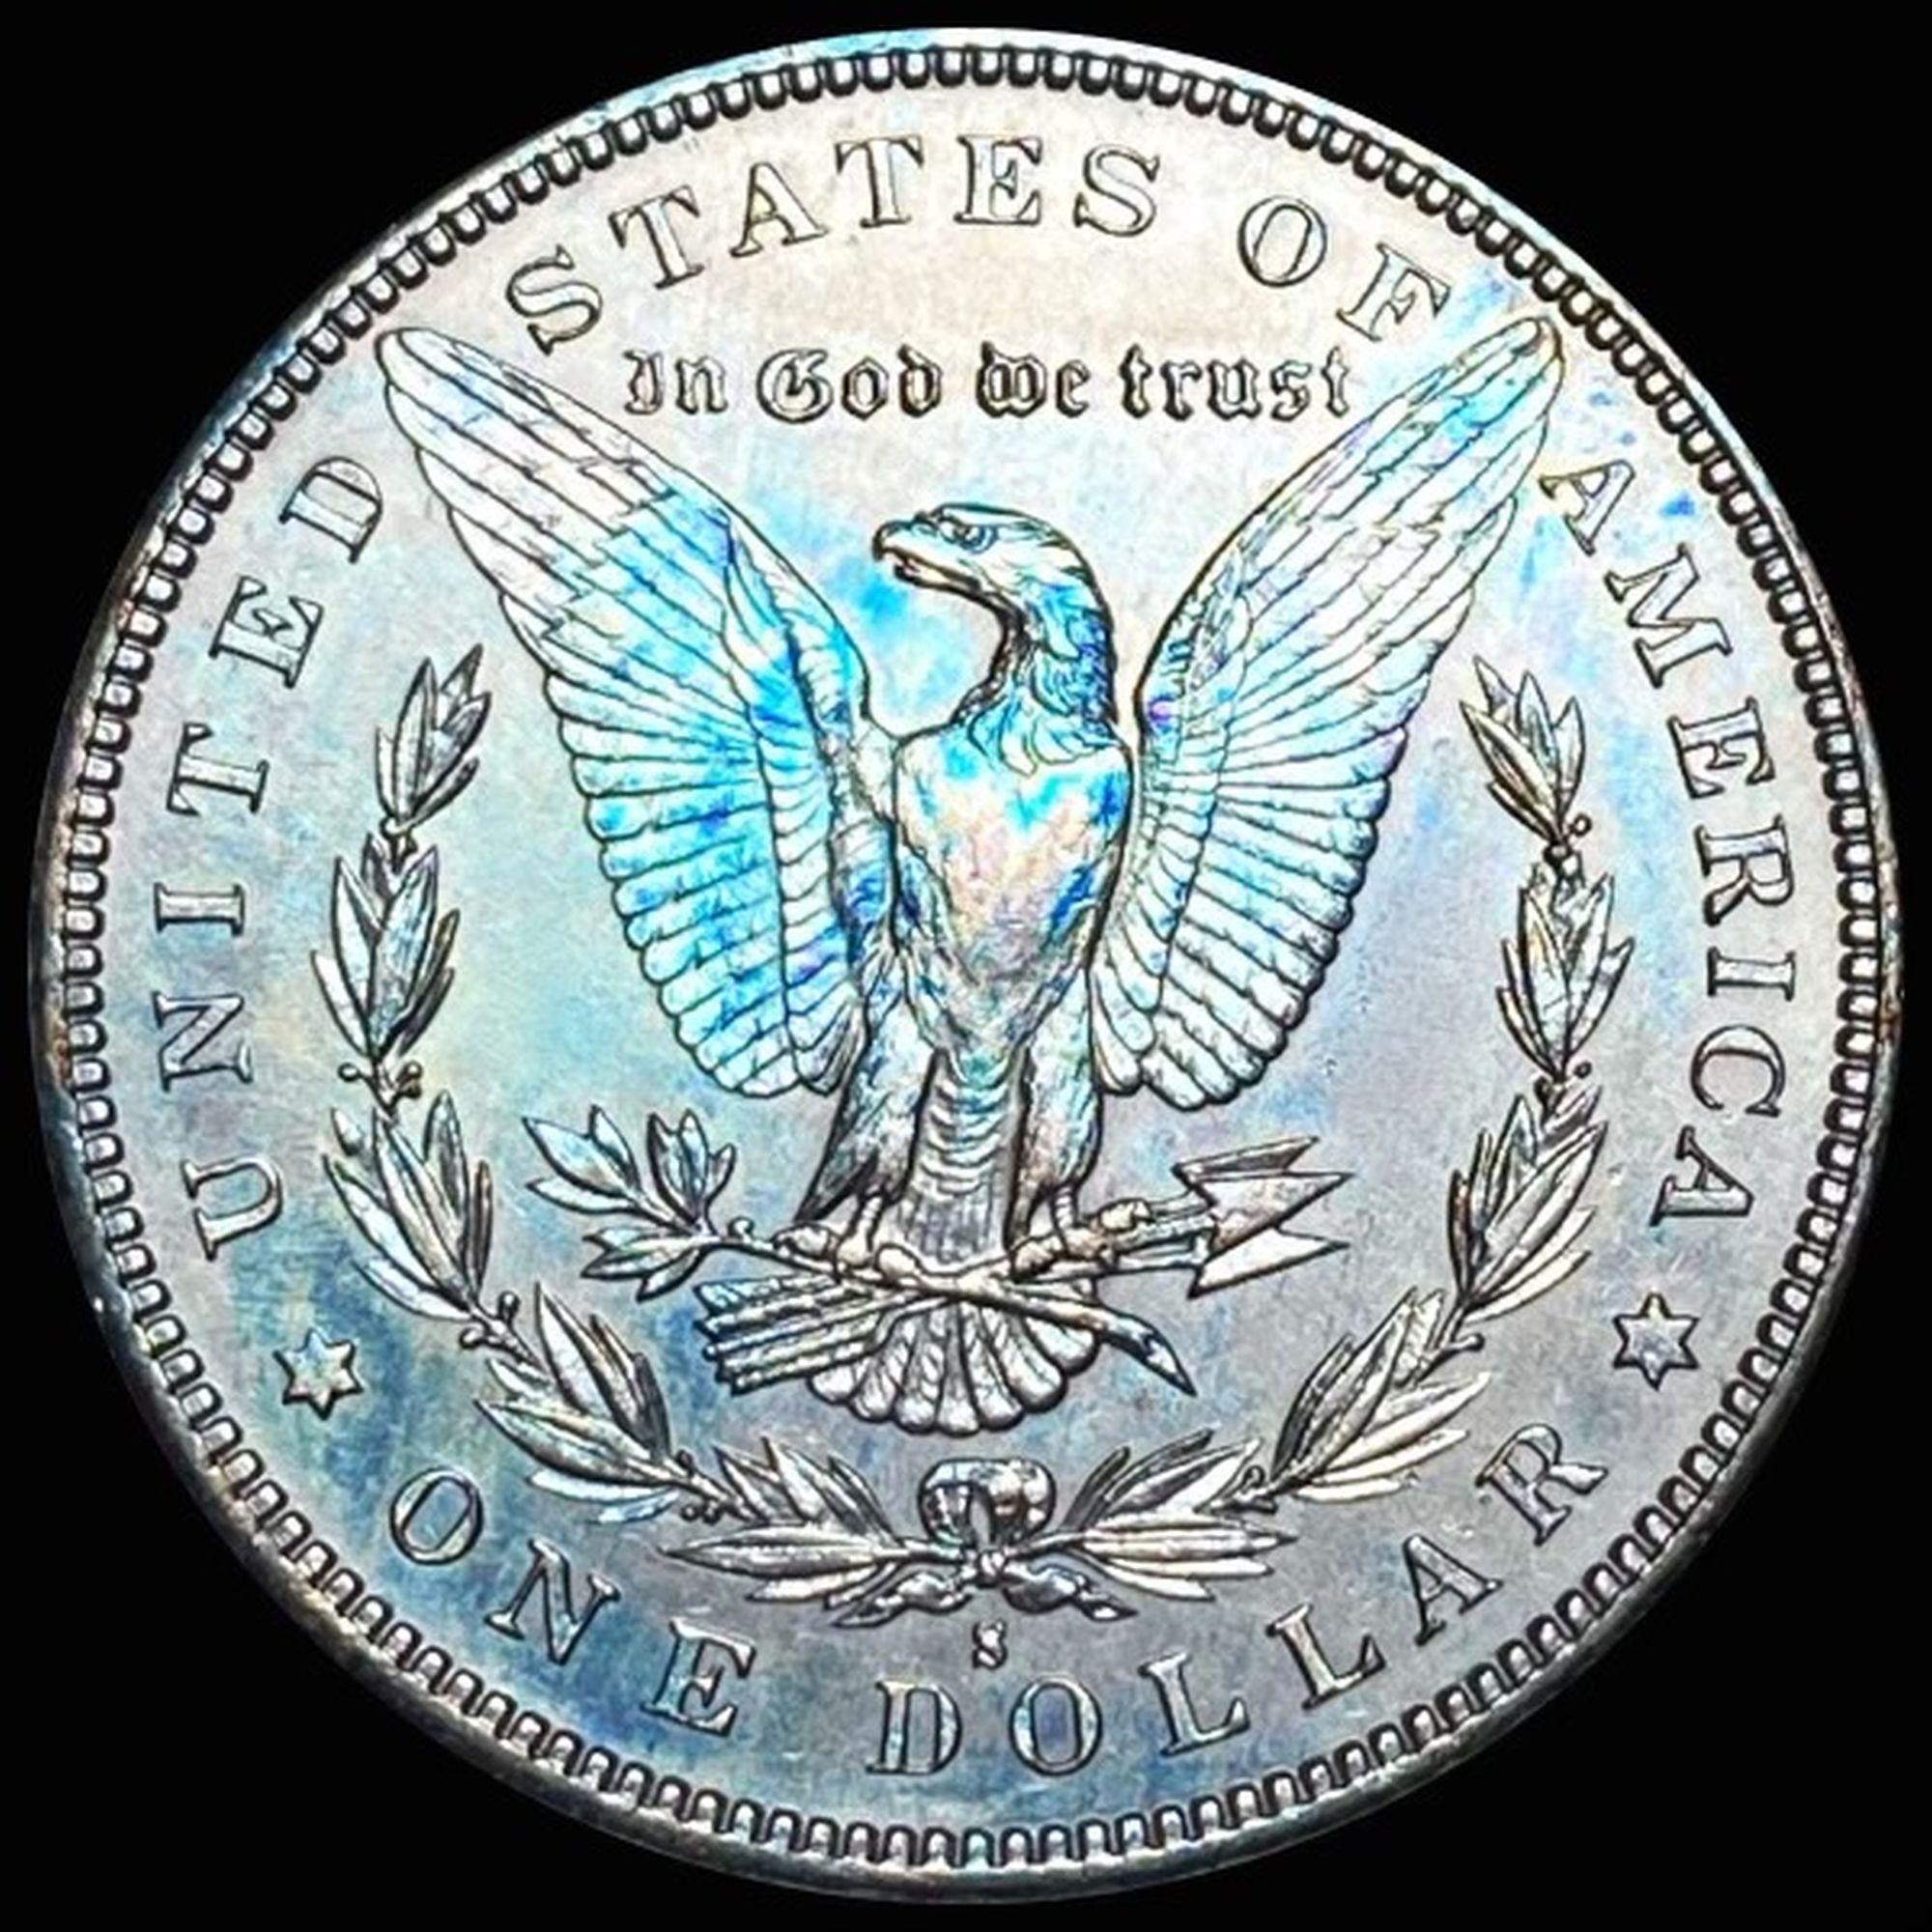 1893-S Morgan Silver Dollar CHOICE AU